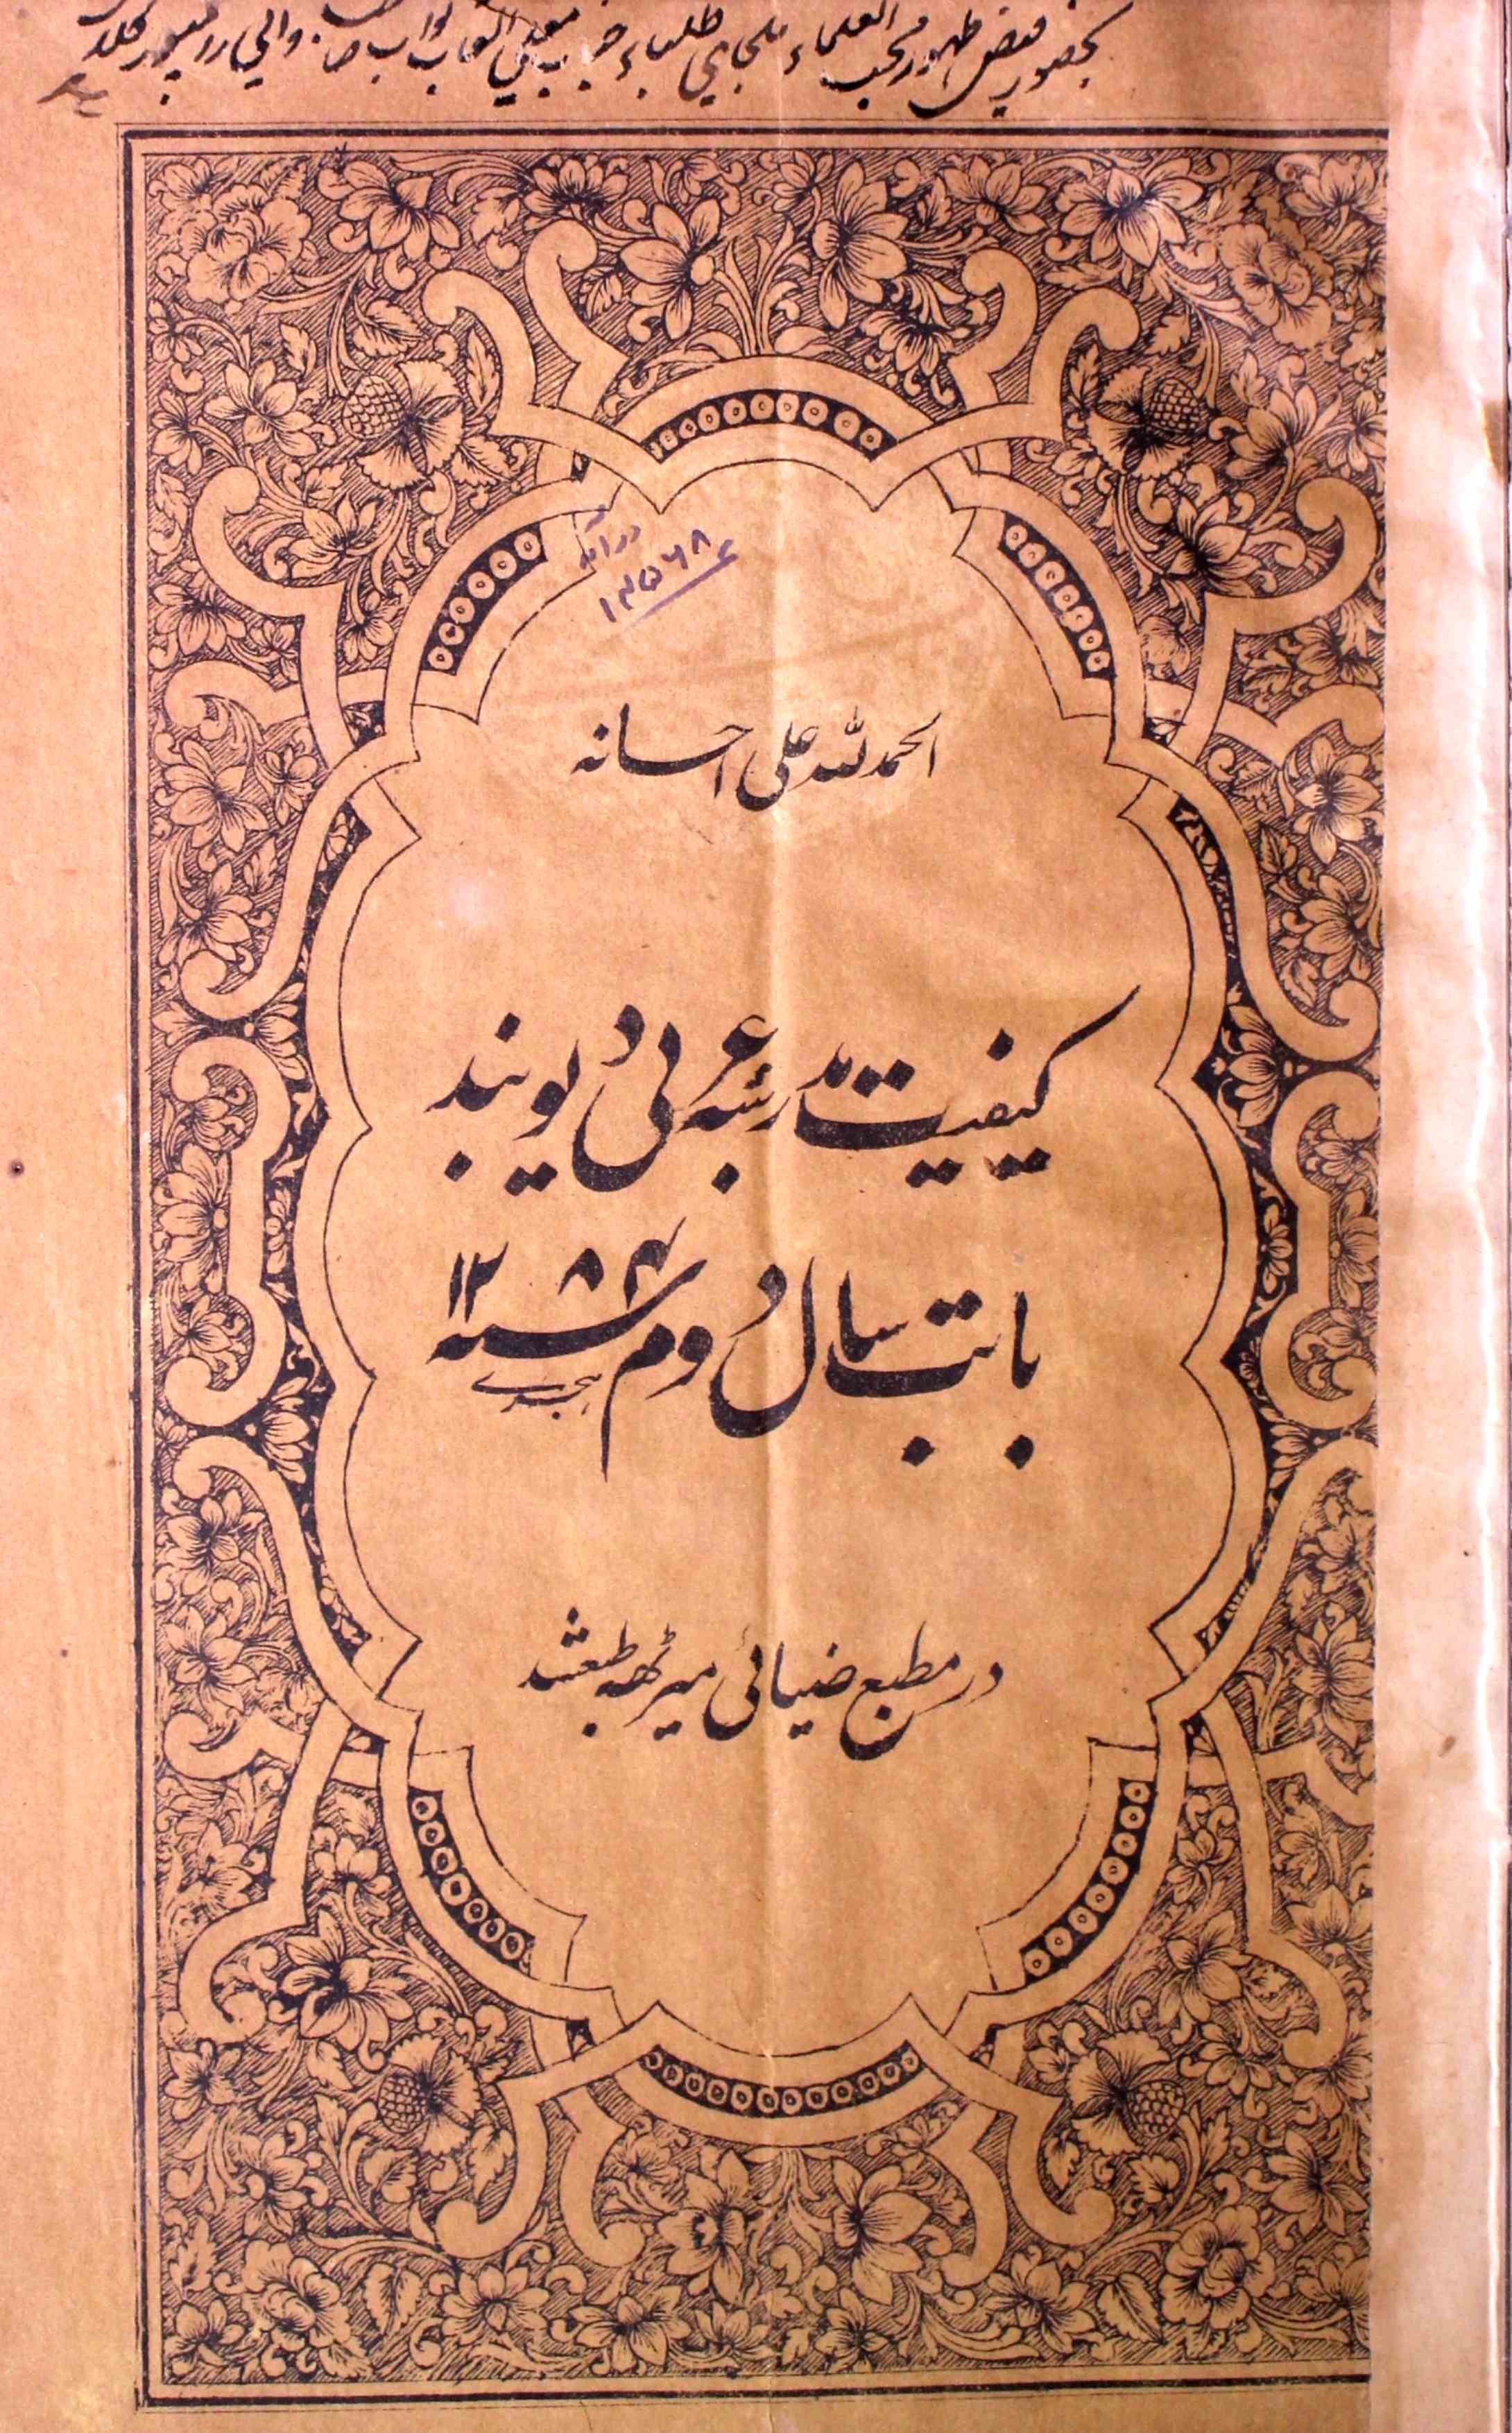 kaifiyat madarsa-e-arabi deoband